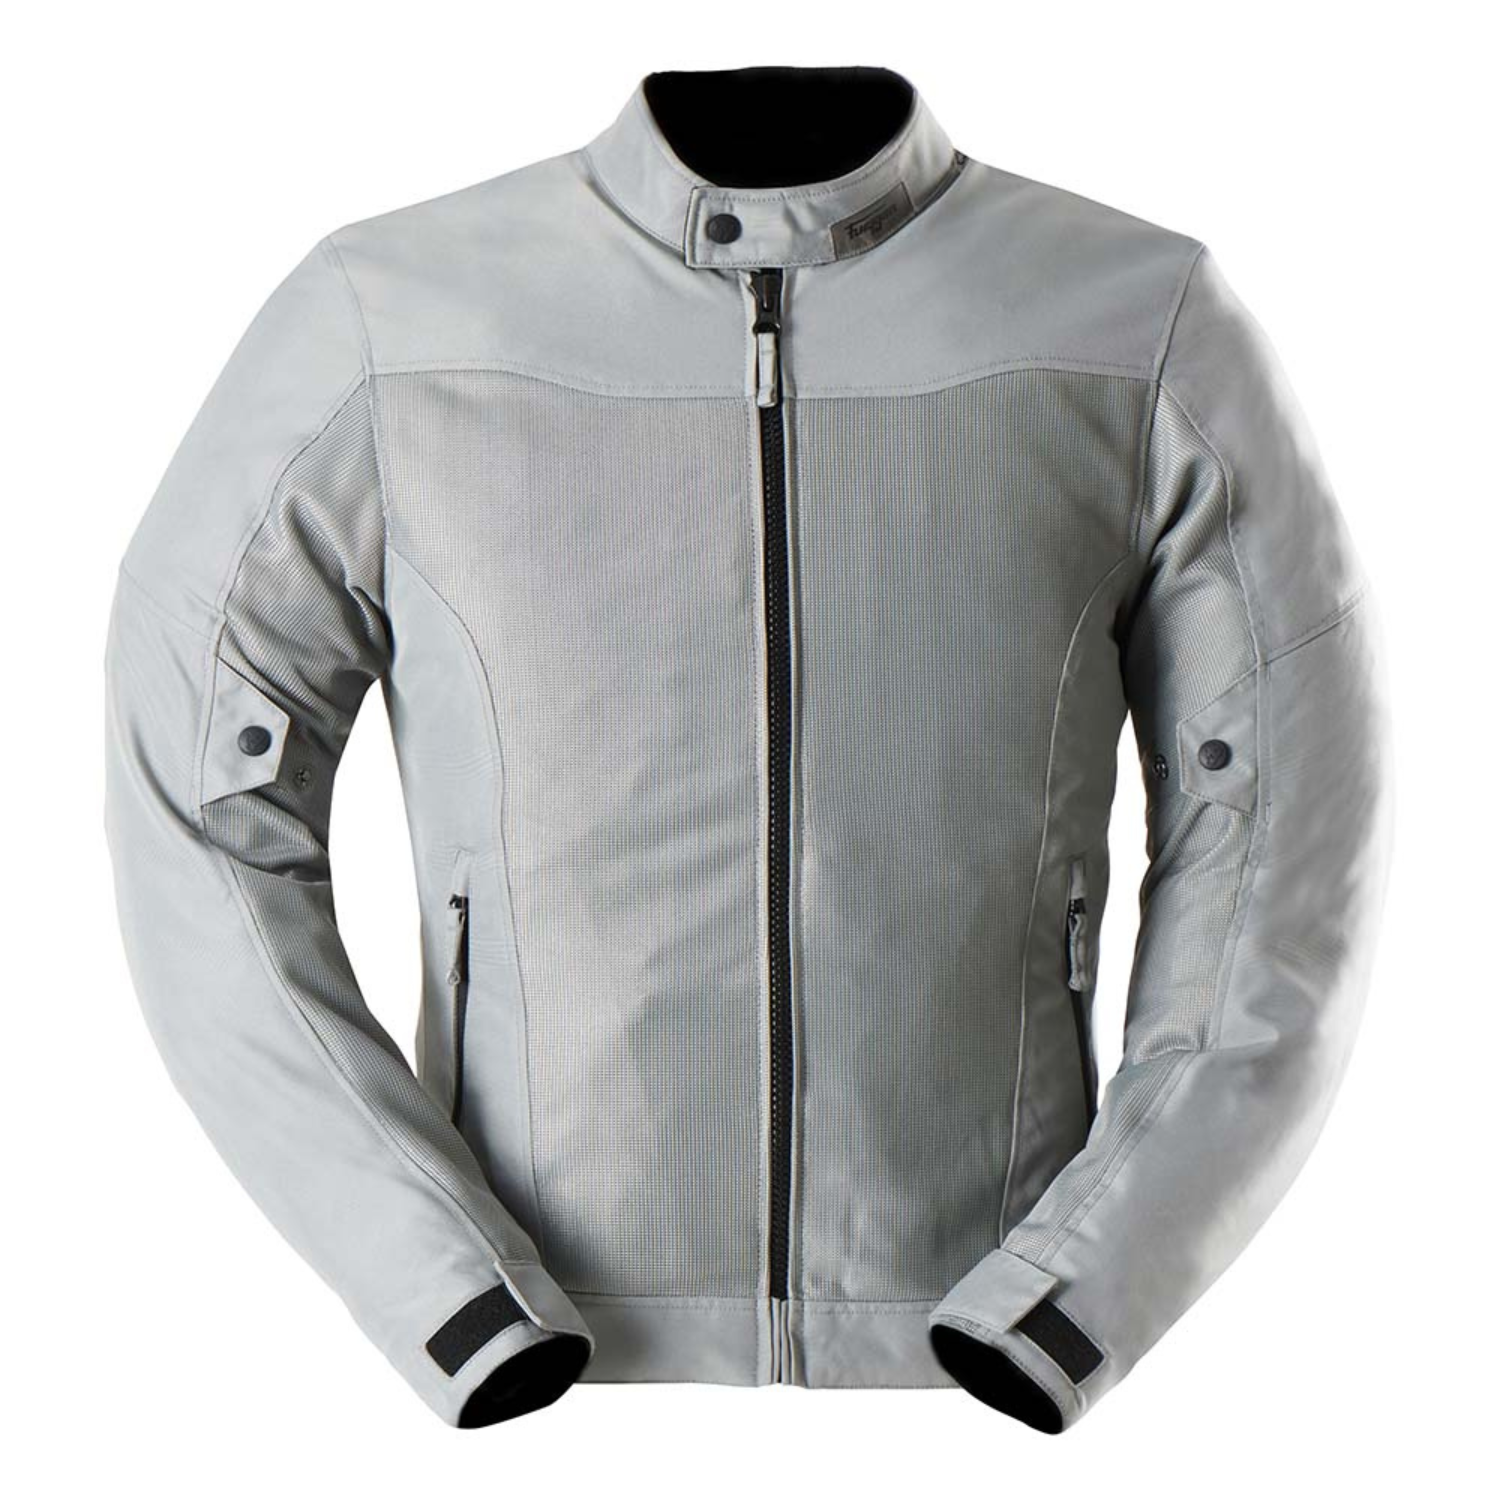 Image of Furygan Mistral Evo 3 Jacket Grey Size 4XL EN